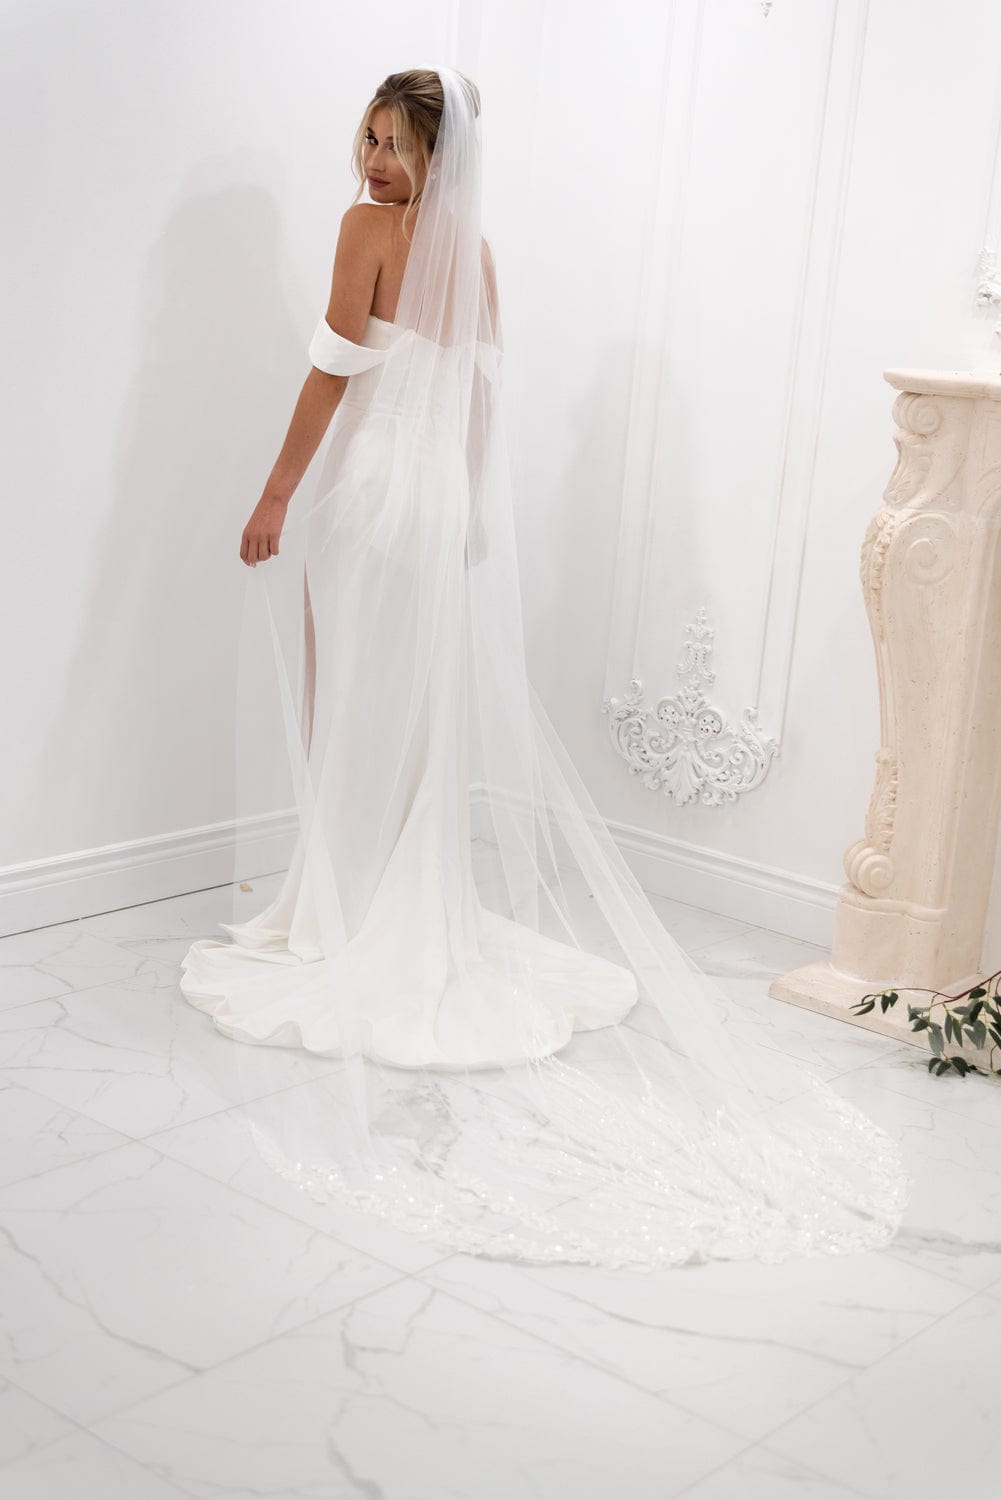 Chic Bridals Bridal Veils Ivory / 1.5x3 "Narrow Cathedral" Dior Veil Wedding Gowns